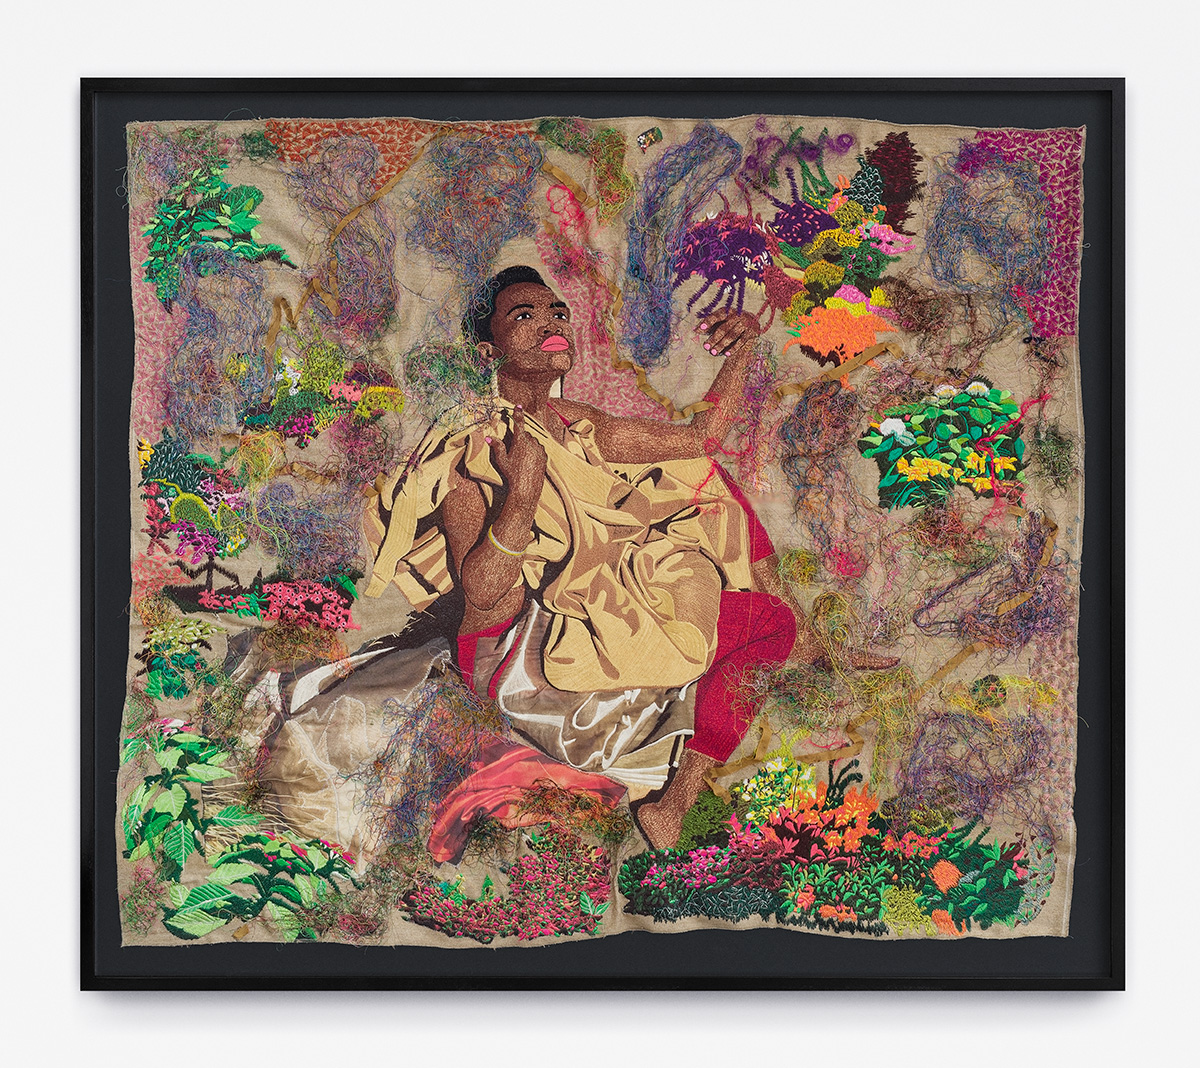 Kimathi Mafafo, 'Self Realization I', 2021, Hand and machine embroidery, 47.24 x 55.11 in 120 x 140 cm. Courtesy of Ebony/Curated